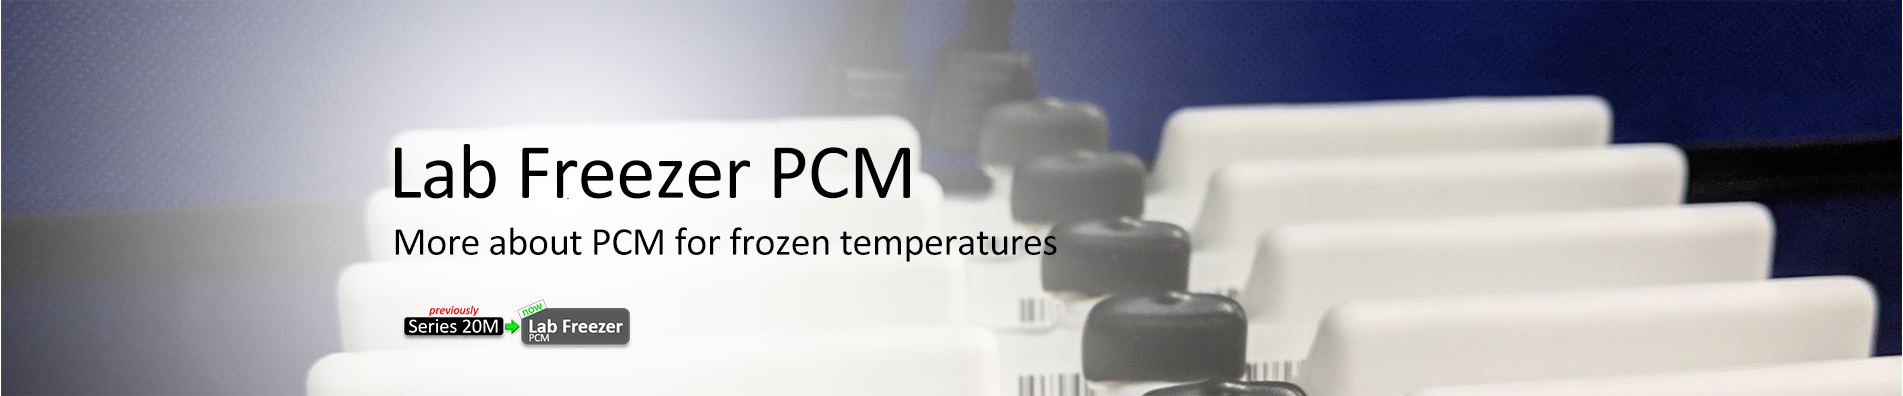 Lab Freezer PCM series 20 header